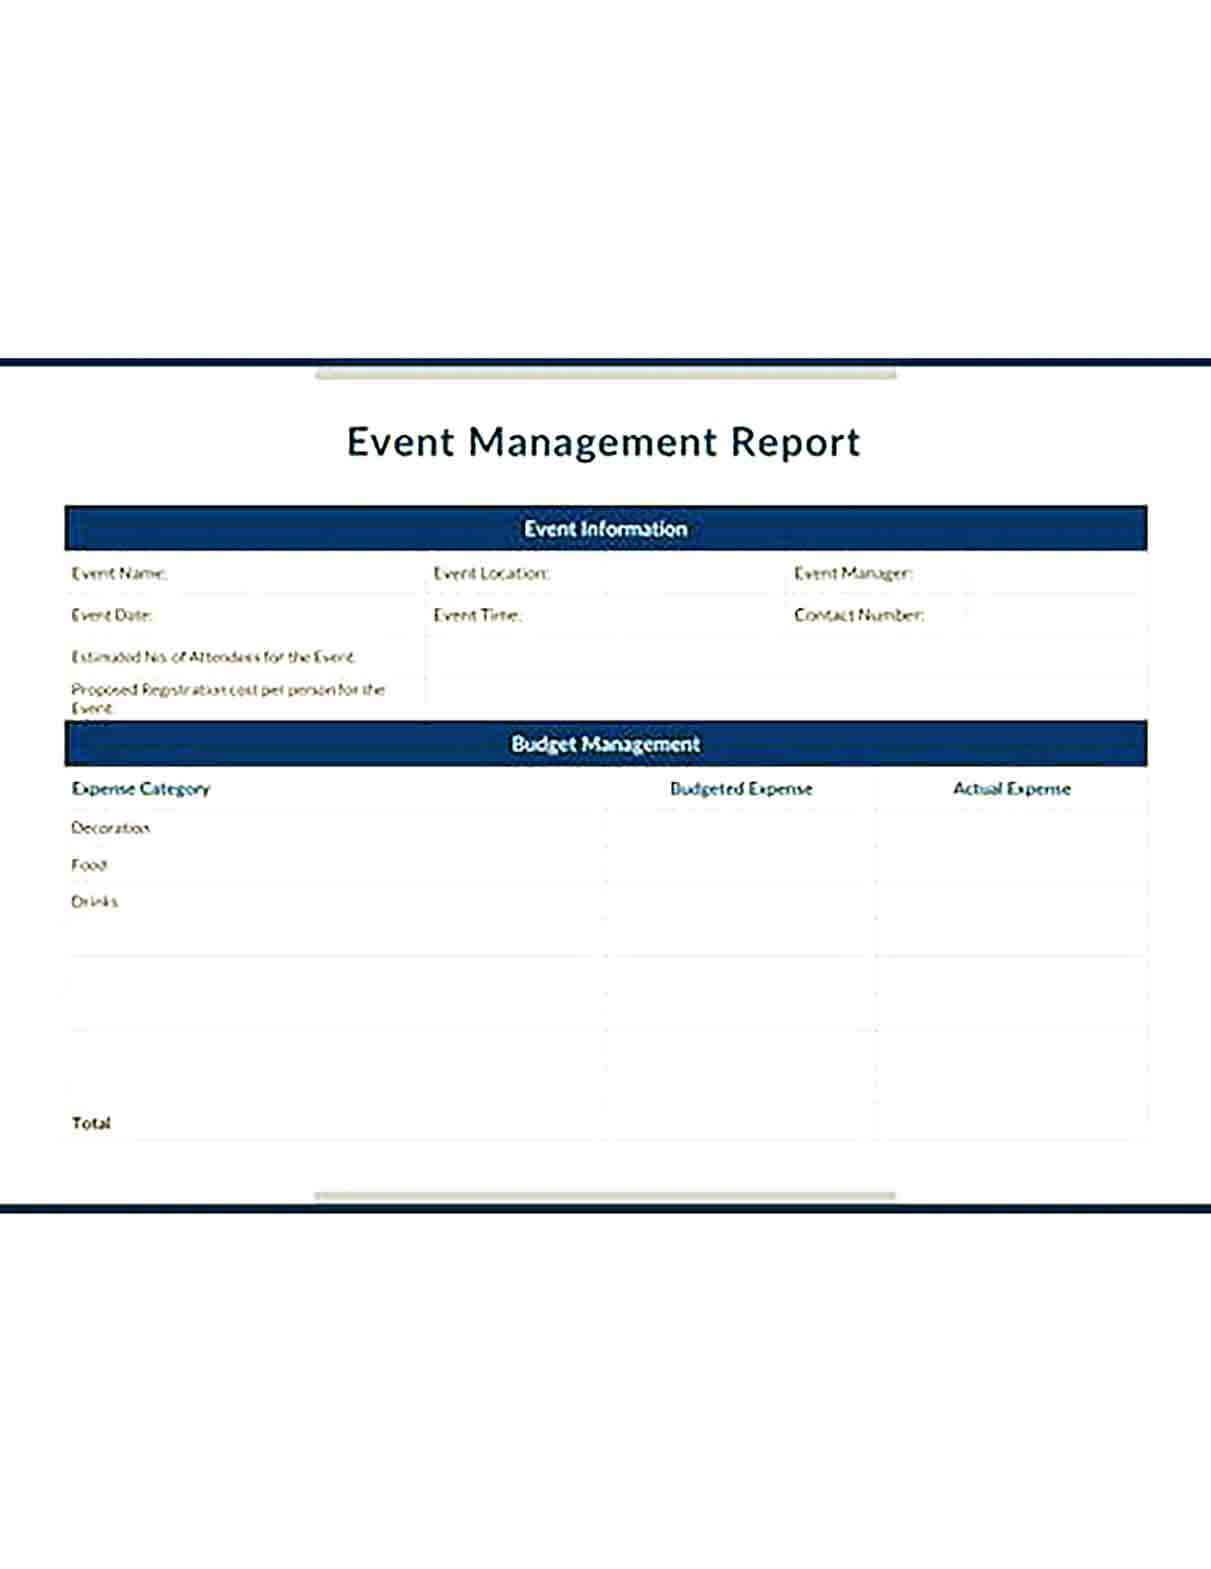 Sample Event Management Report 1 440x311 1